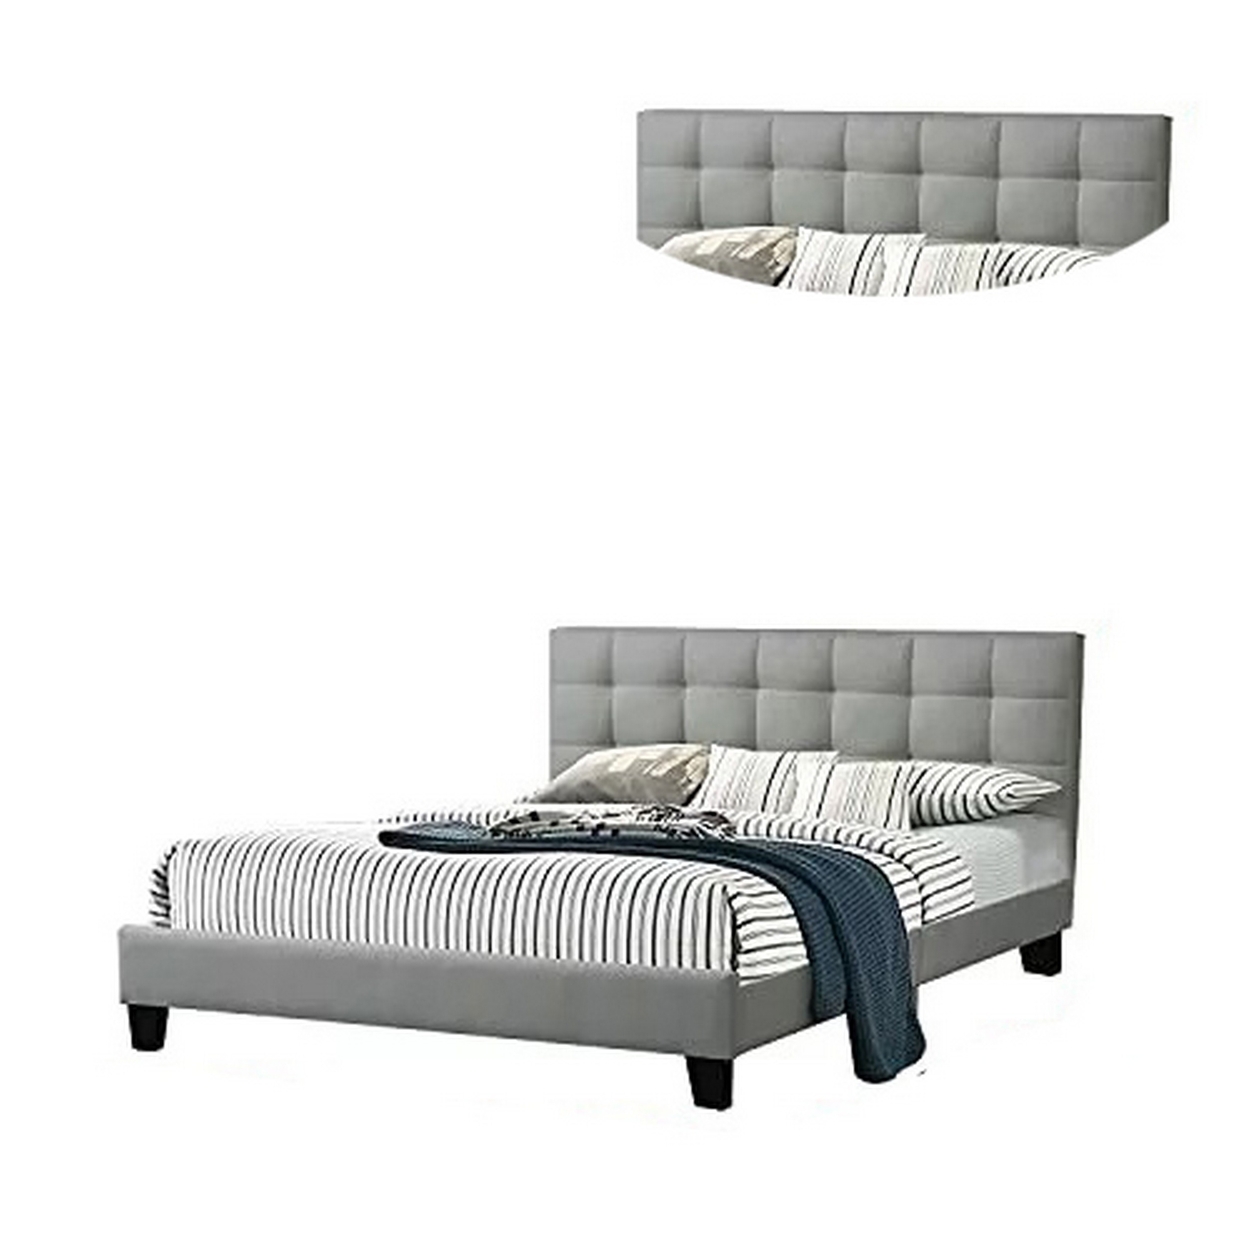 Dex Modern Platform California King Bed, Tufted Upholstery, Light Gray- Saltoro Sherpi